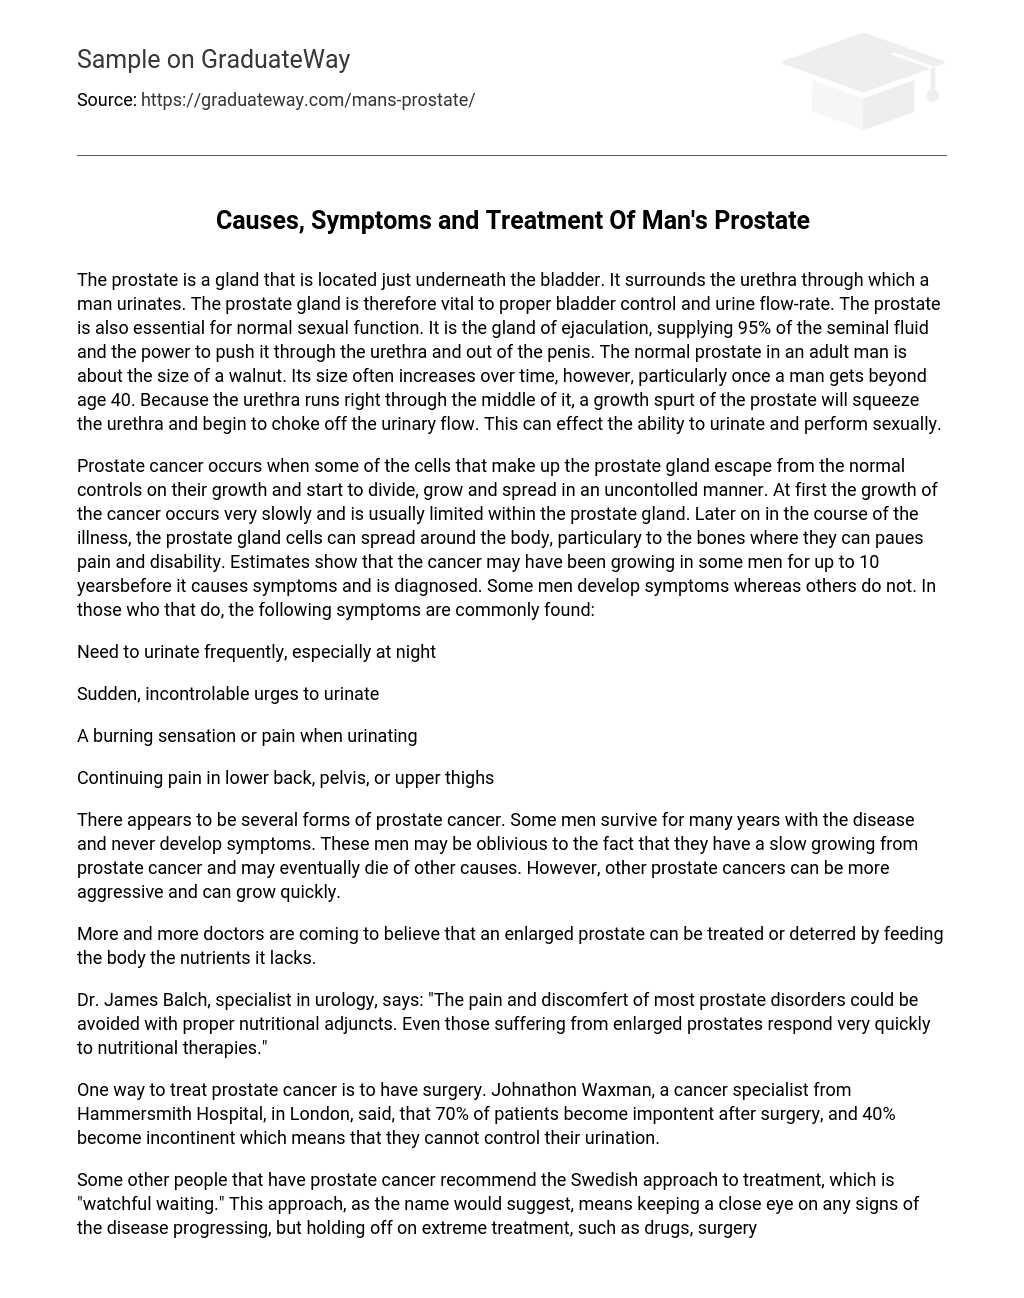 Сauses, Symptoms and Treatment Of Man’s Prostate